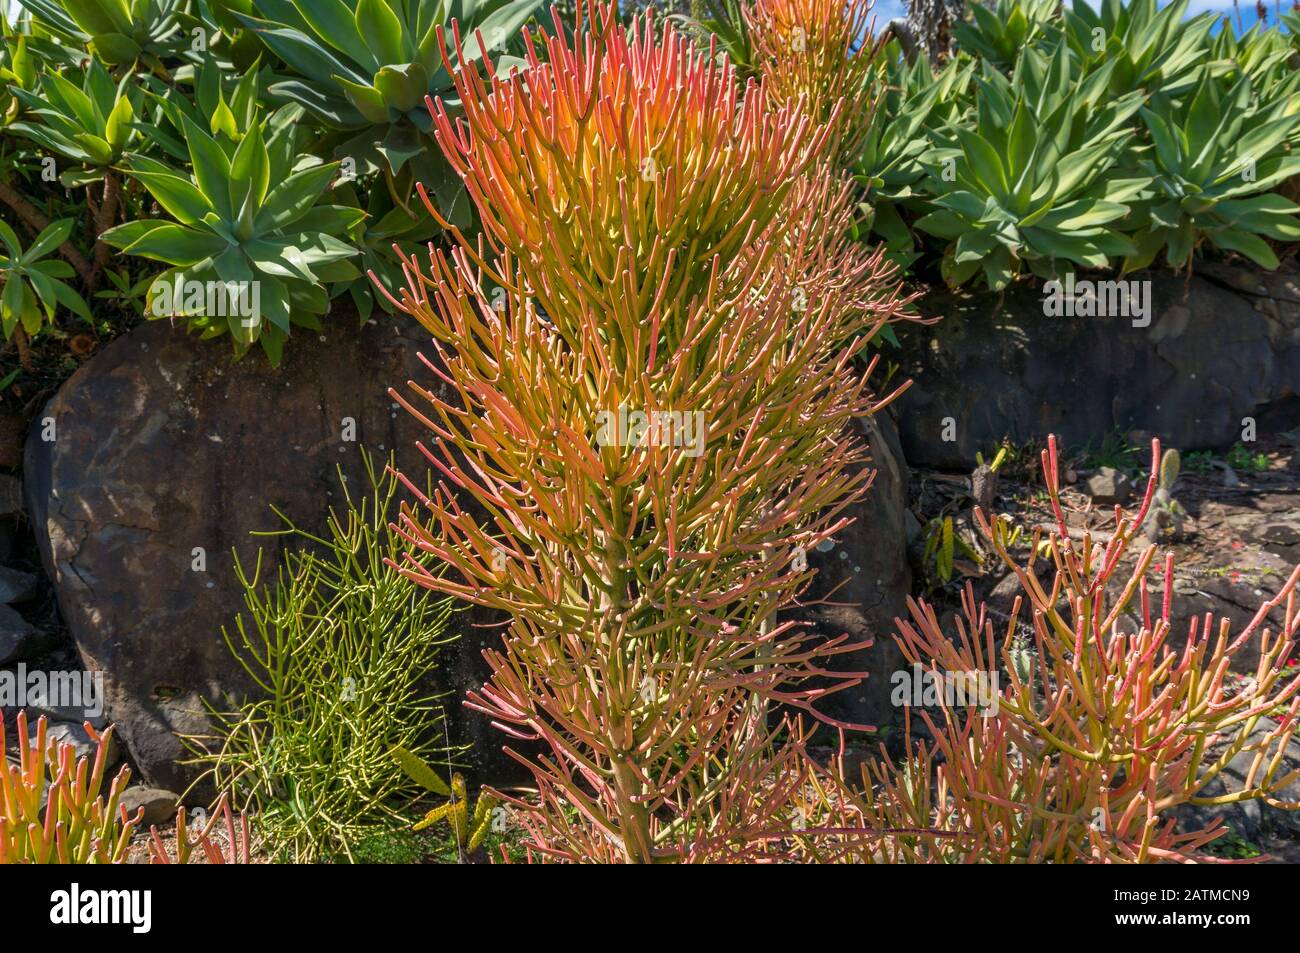 Firestick plant or Euphorbia Tirucalli tree in the garden. Decorative exotic plant Stock Photo